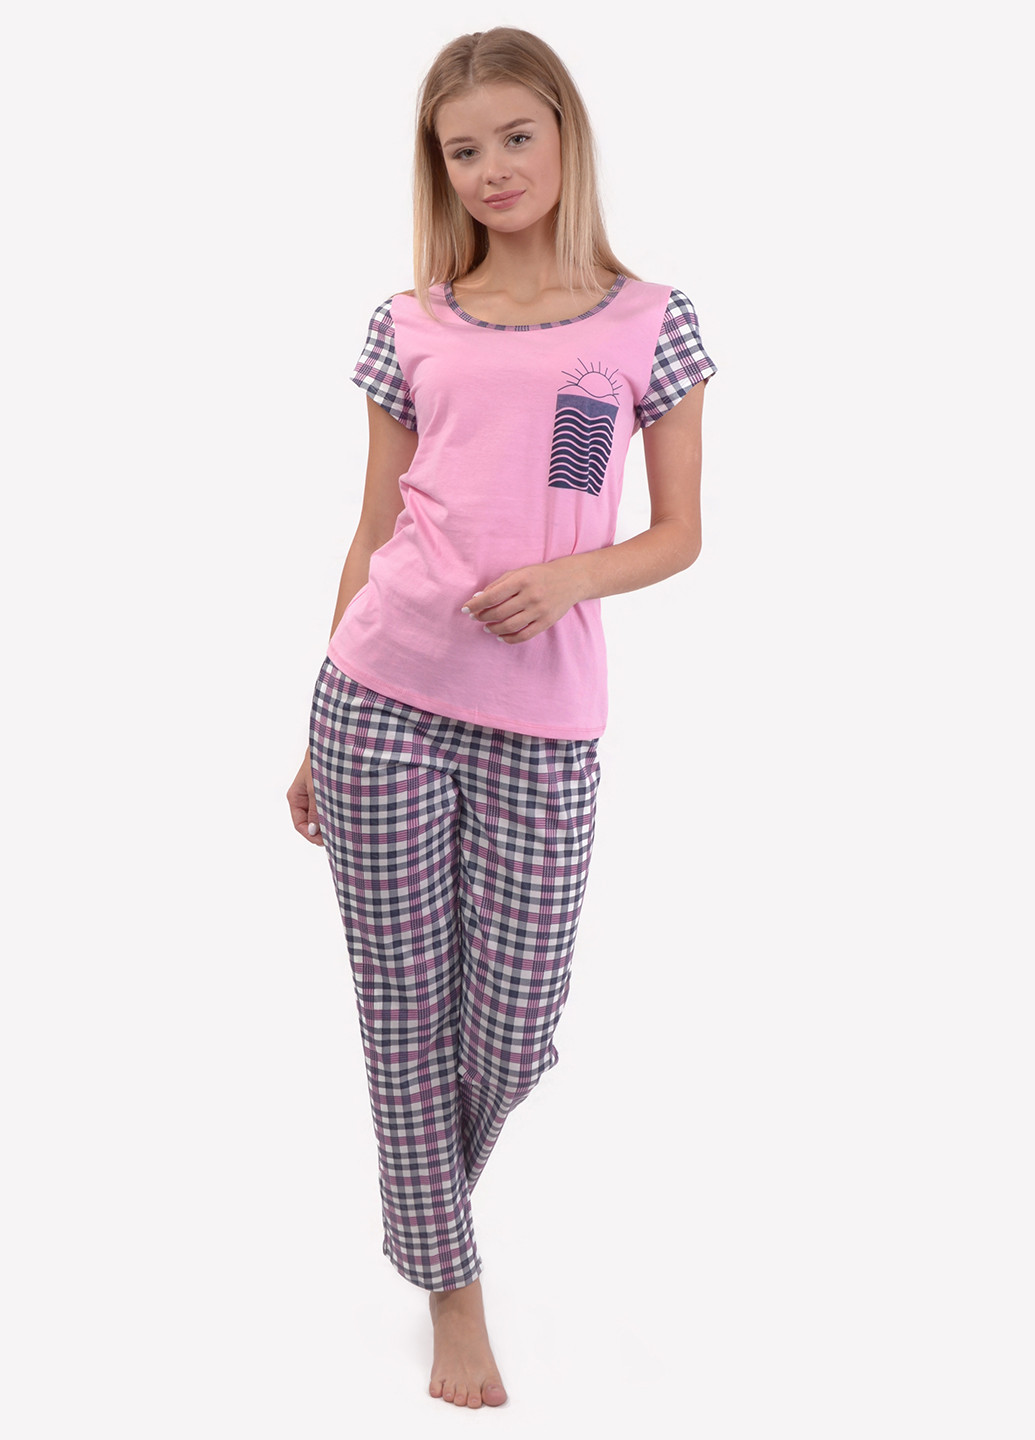 Рожева всесезон піжама (футболка, штани) футболка + штани NEL